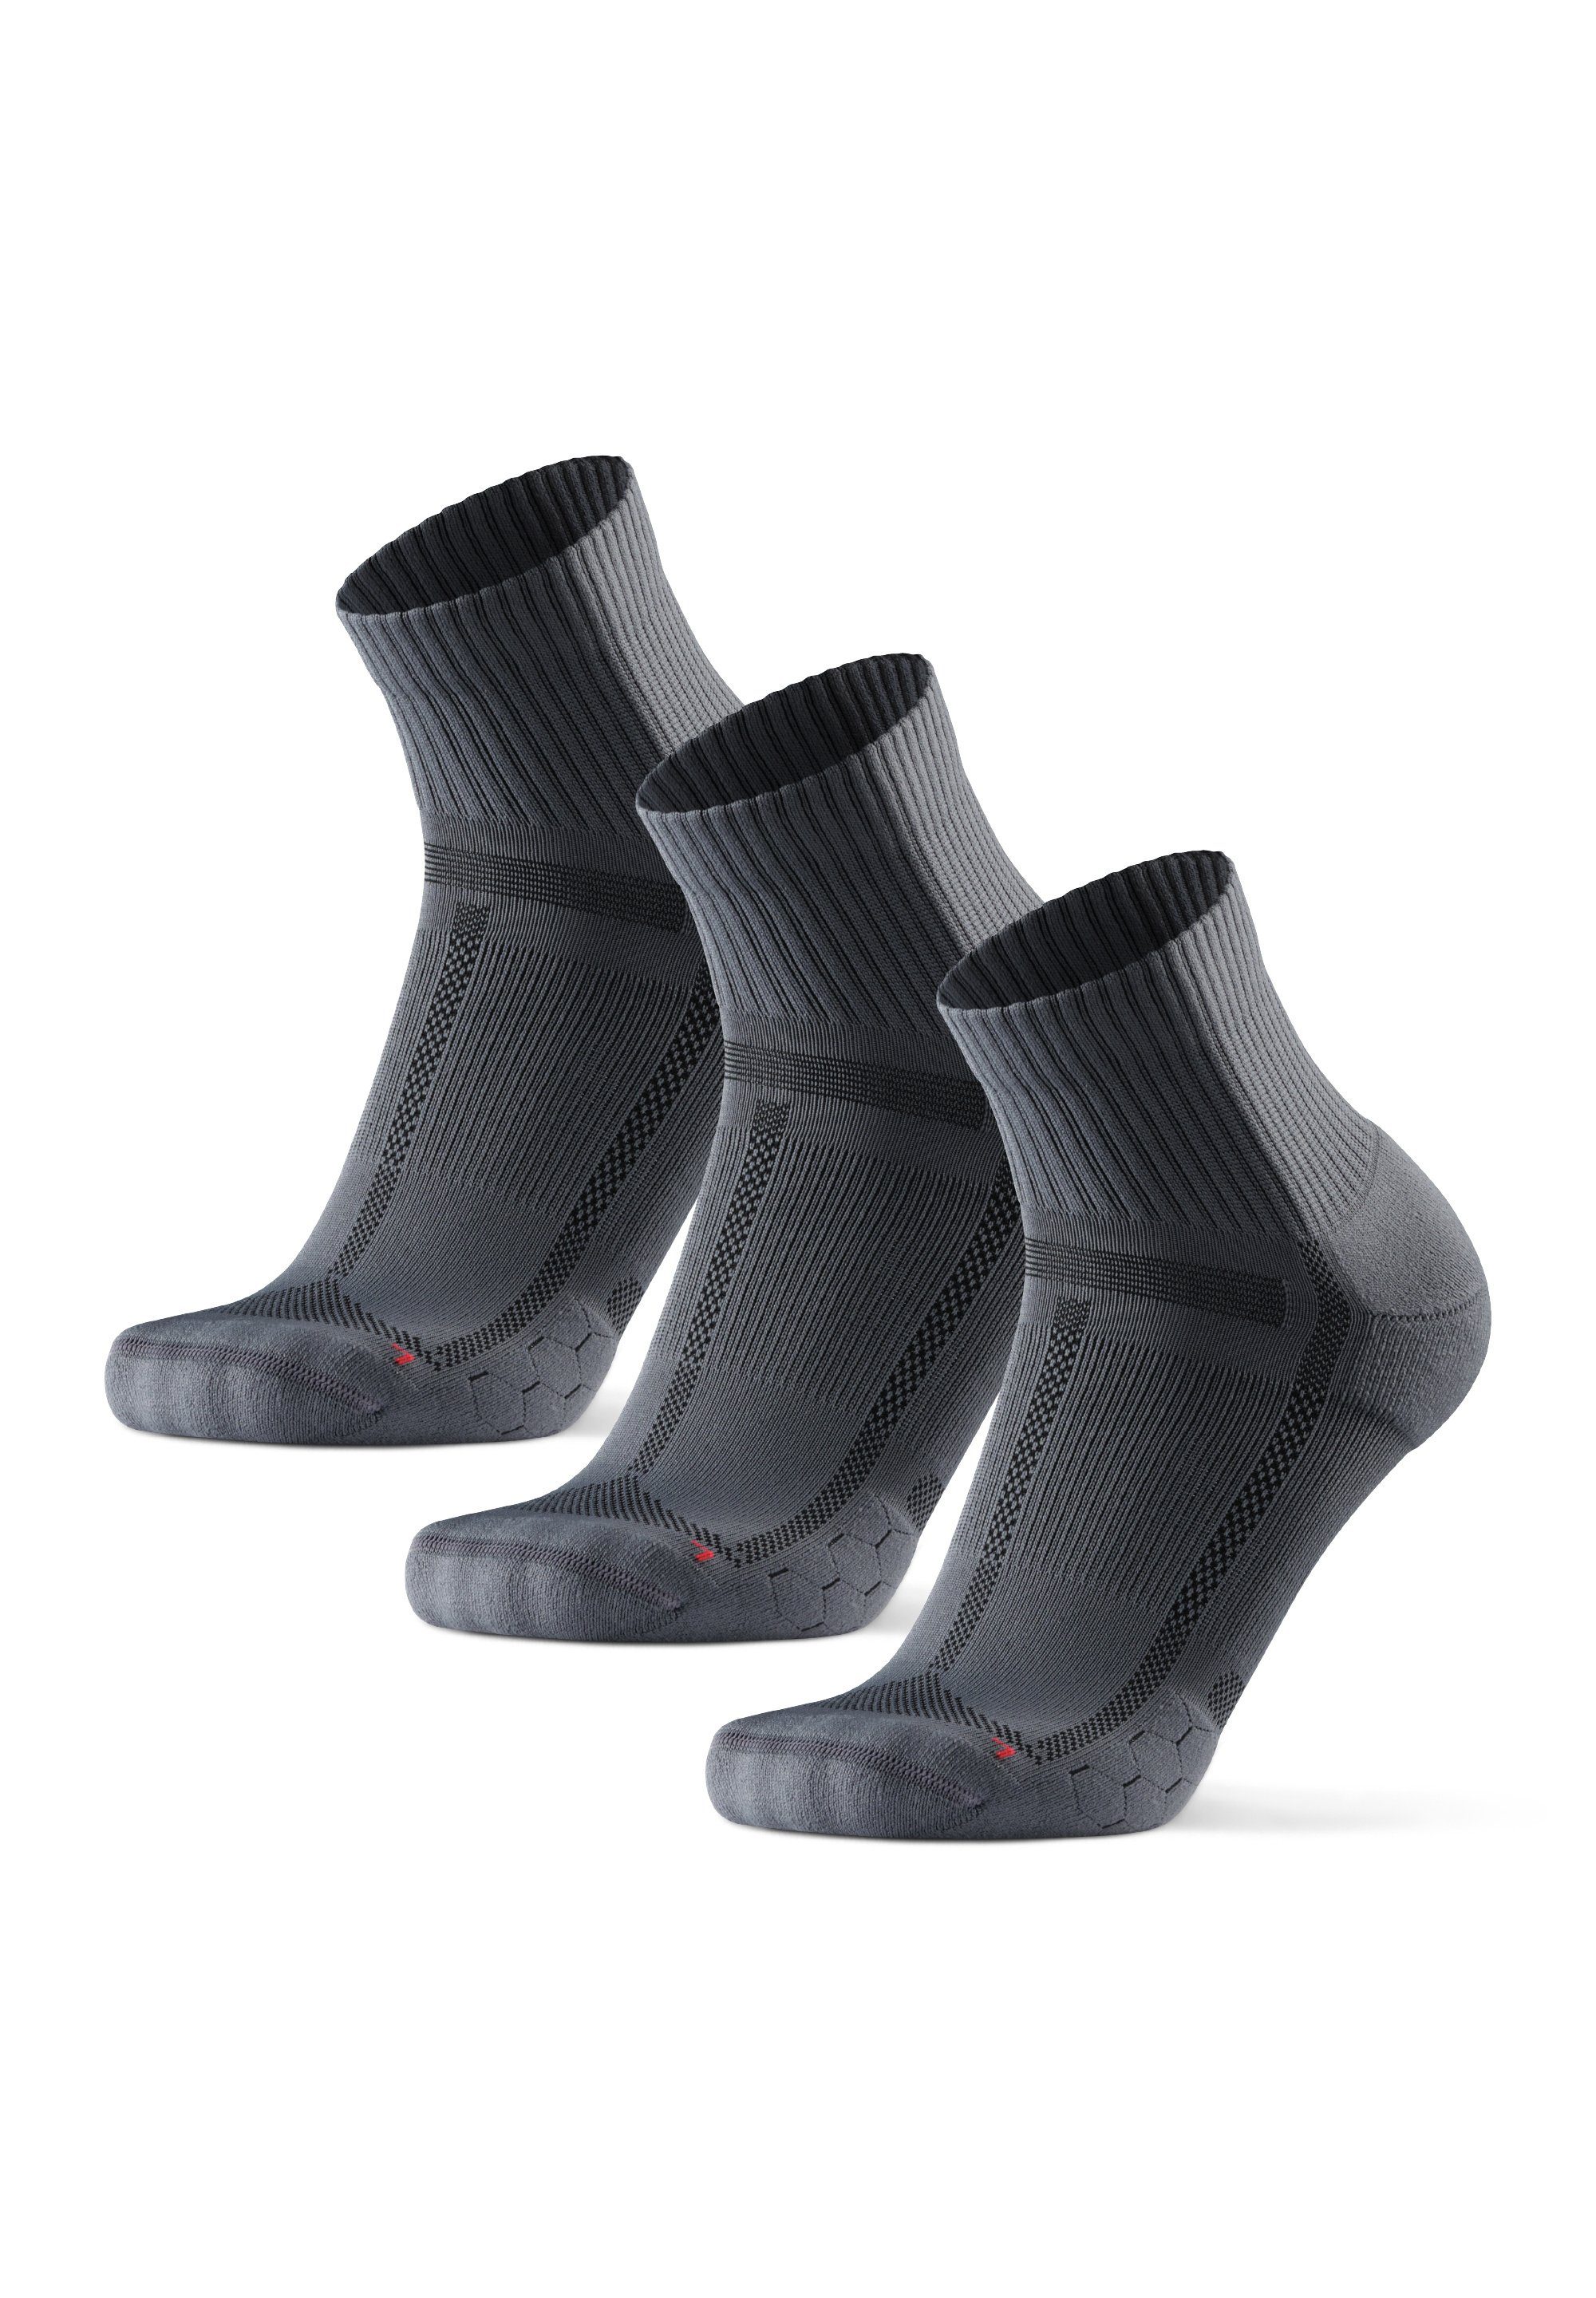 DANISH ENDURANCE Laufsocken Long Distance Running Socks (Packung, 3-Paar) Anti-Blasen, Technisch grey/black